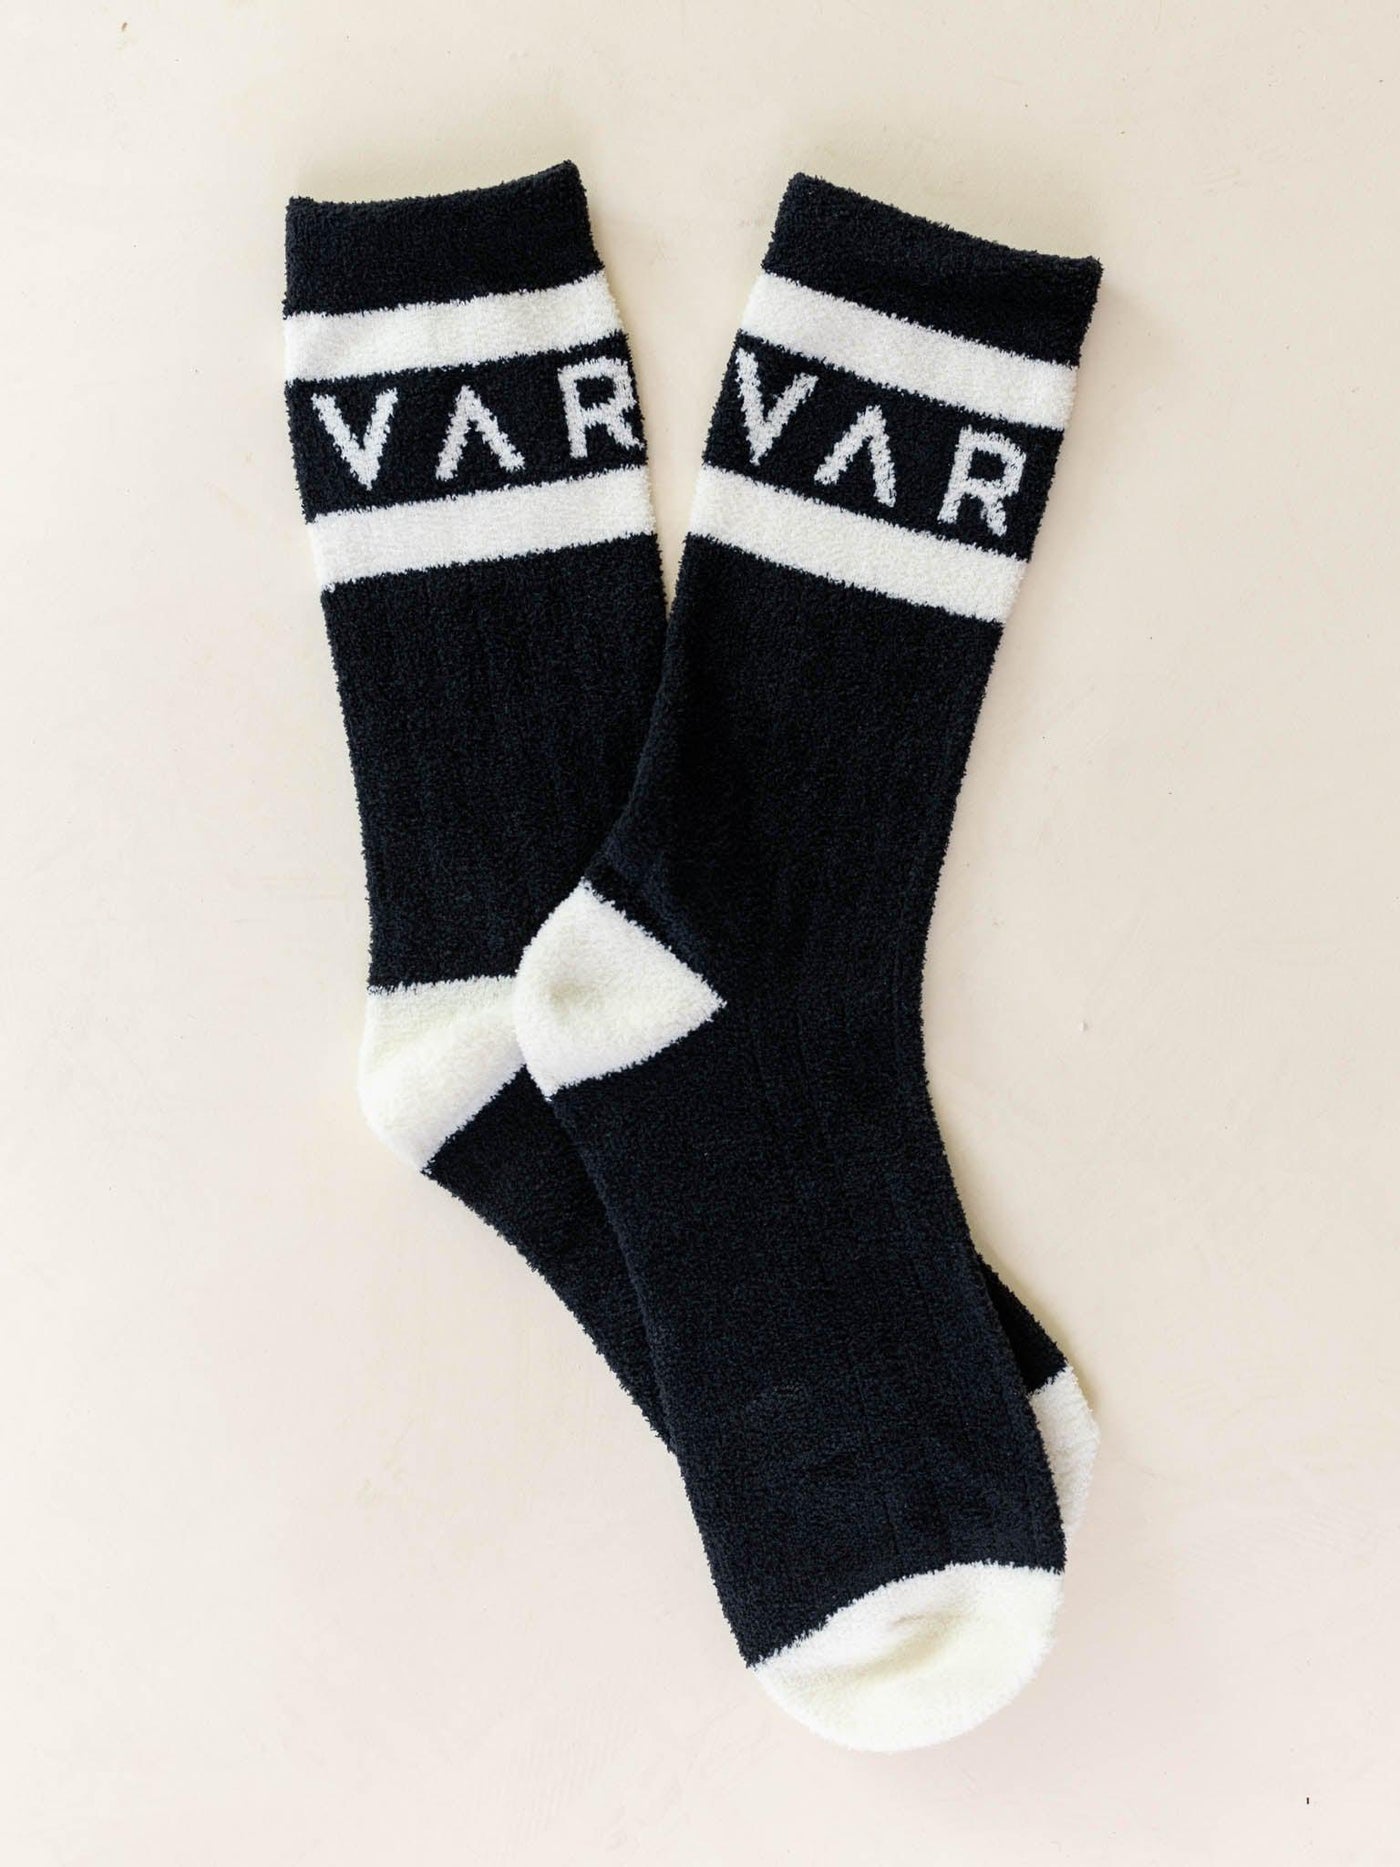 Varley Spencer Sock